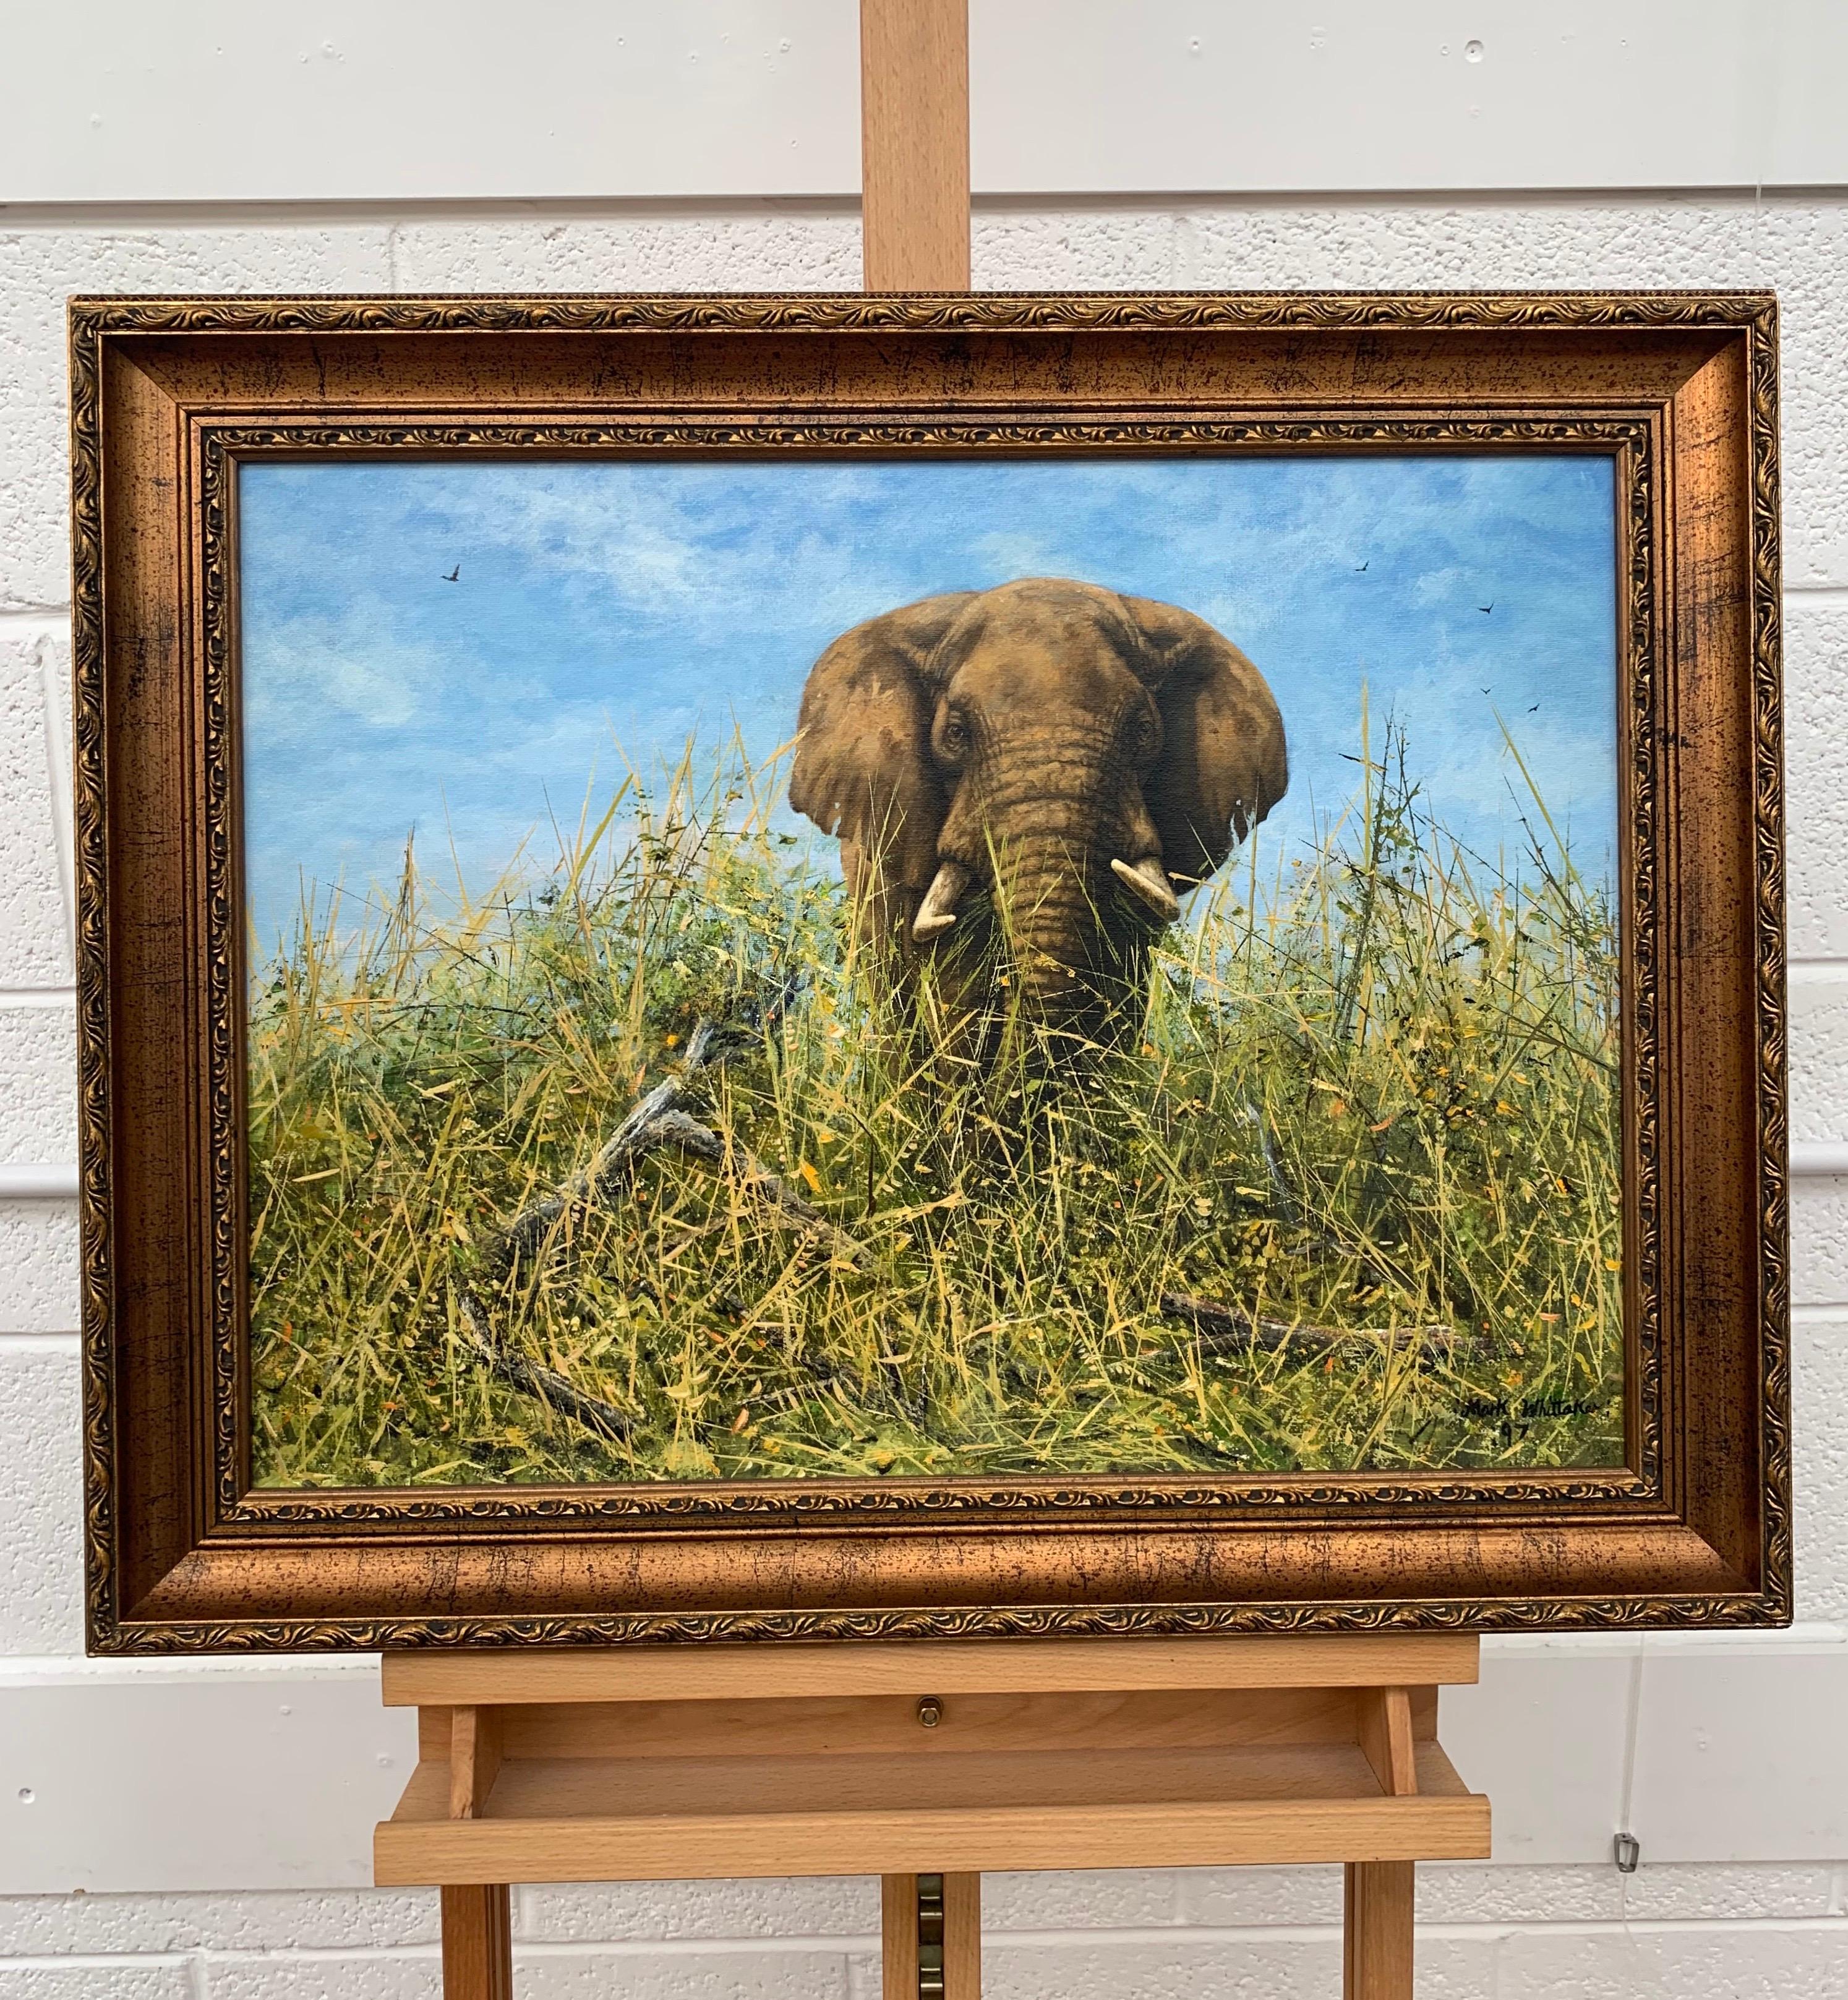 oil paintings of elephants